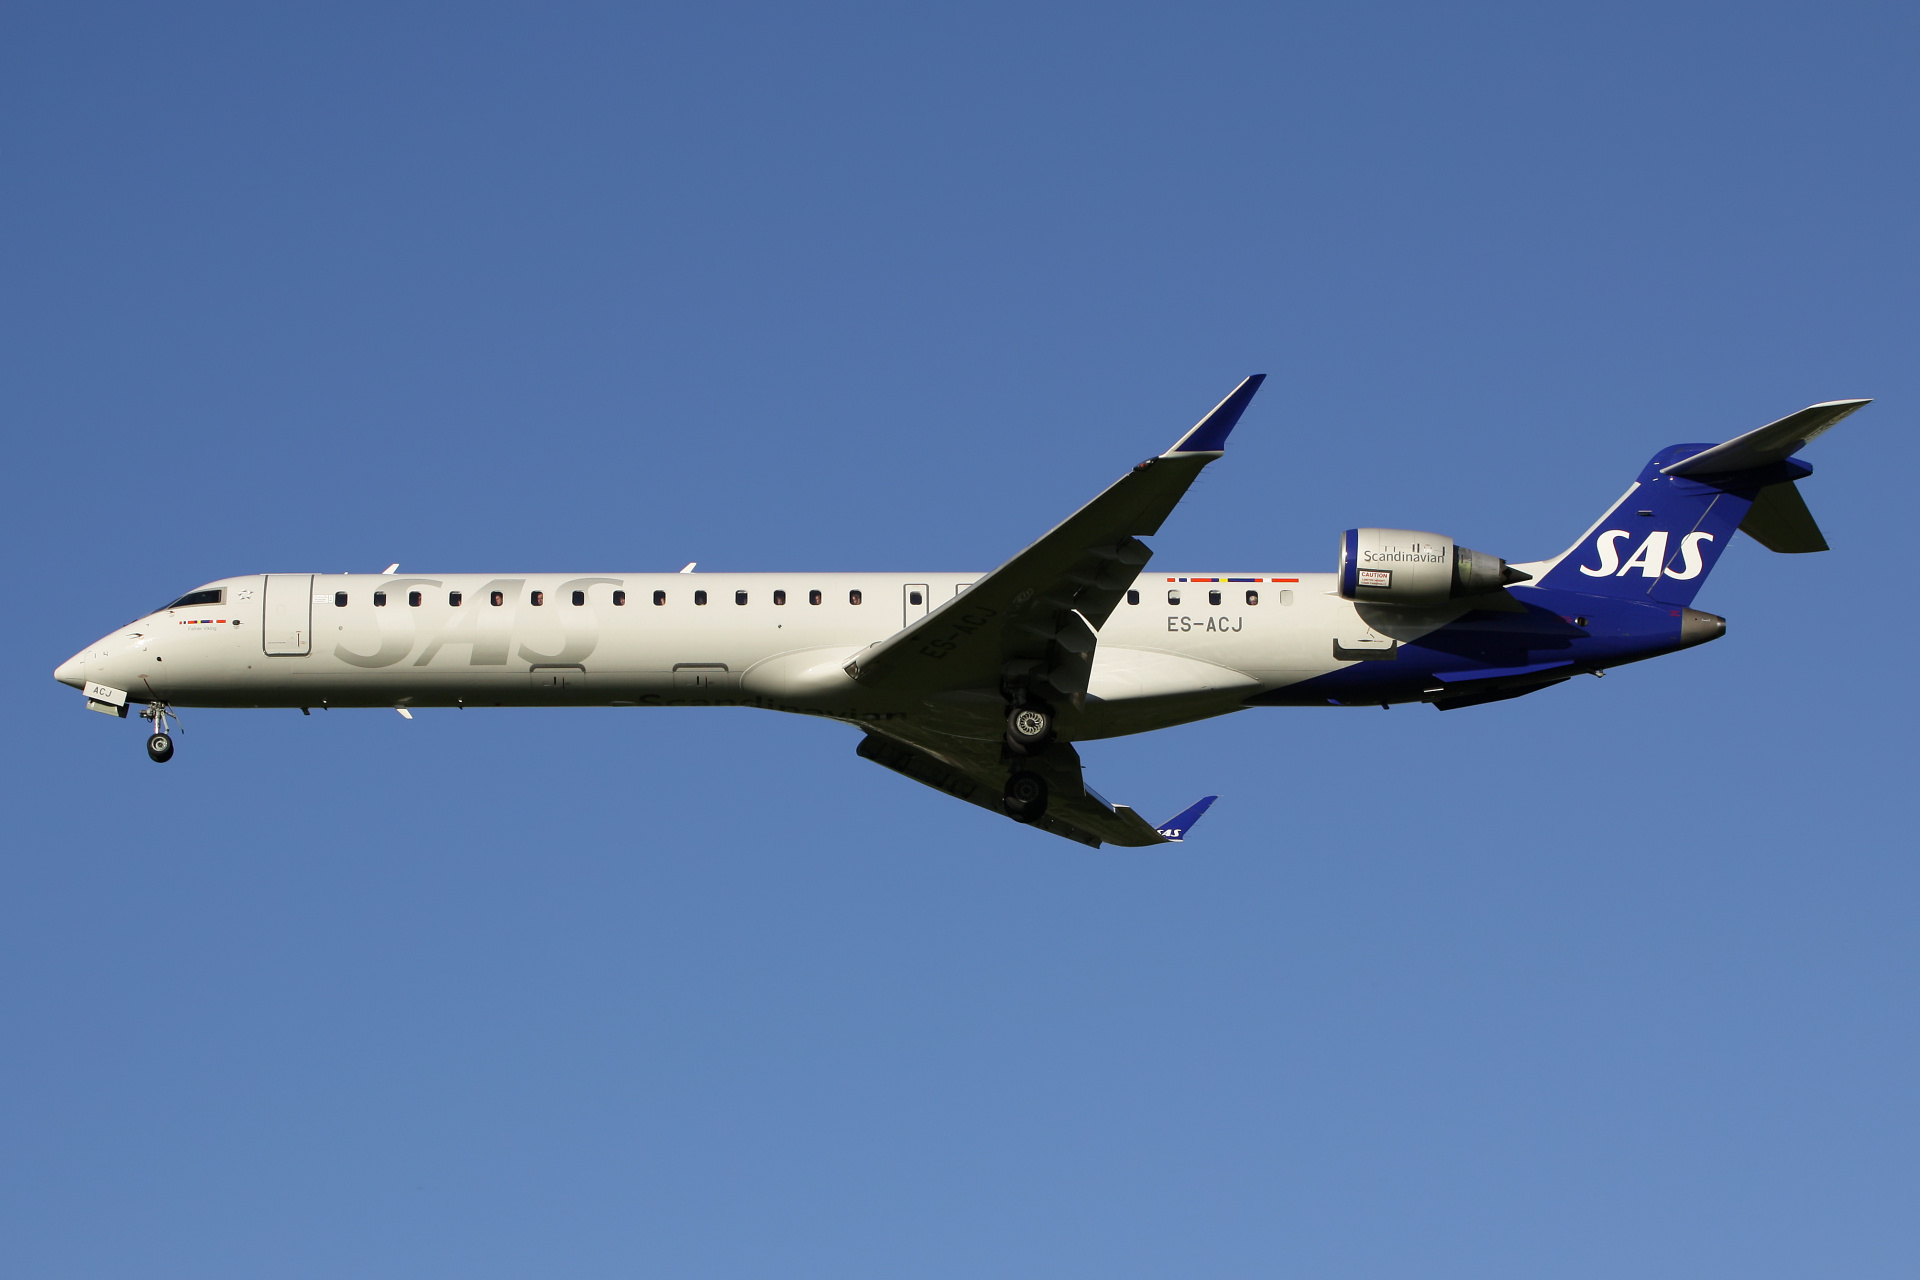 ES-ACJ (Aircraft » EPWA Spotting » Mitsubishi Regional Jet » CRJ-900 » SAS Scandinavian Airlines)